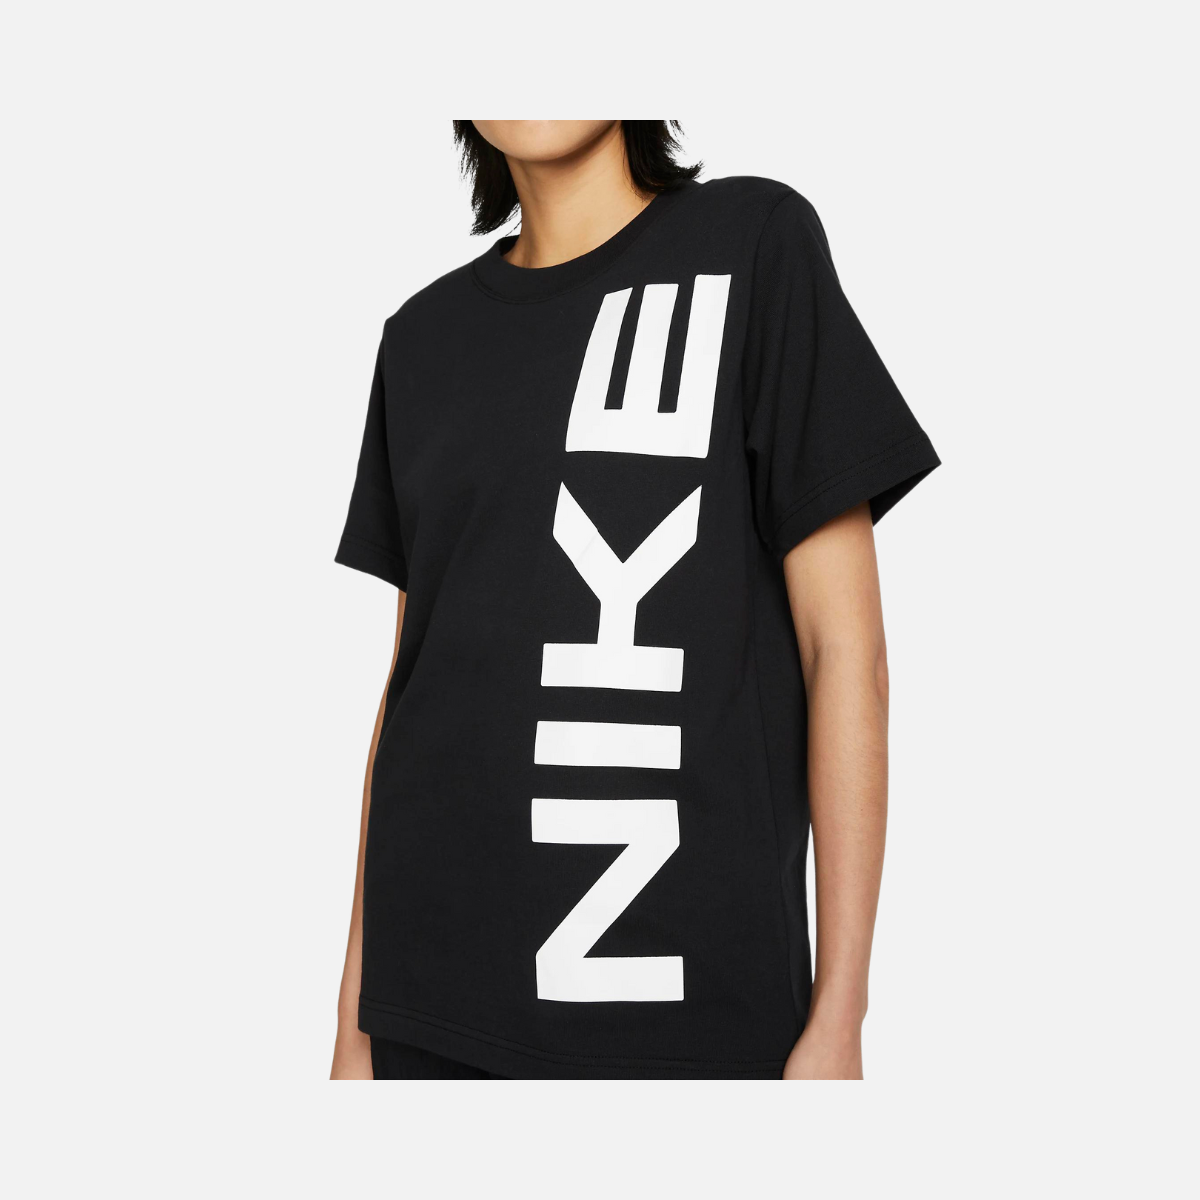 Nike Air Women's T-Shirt -Black/White